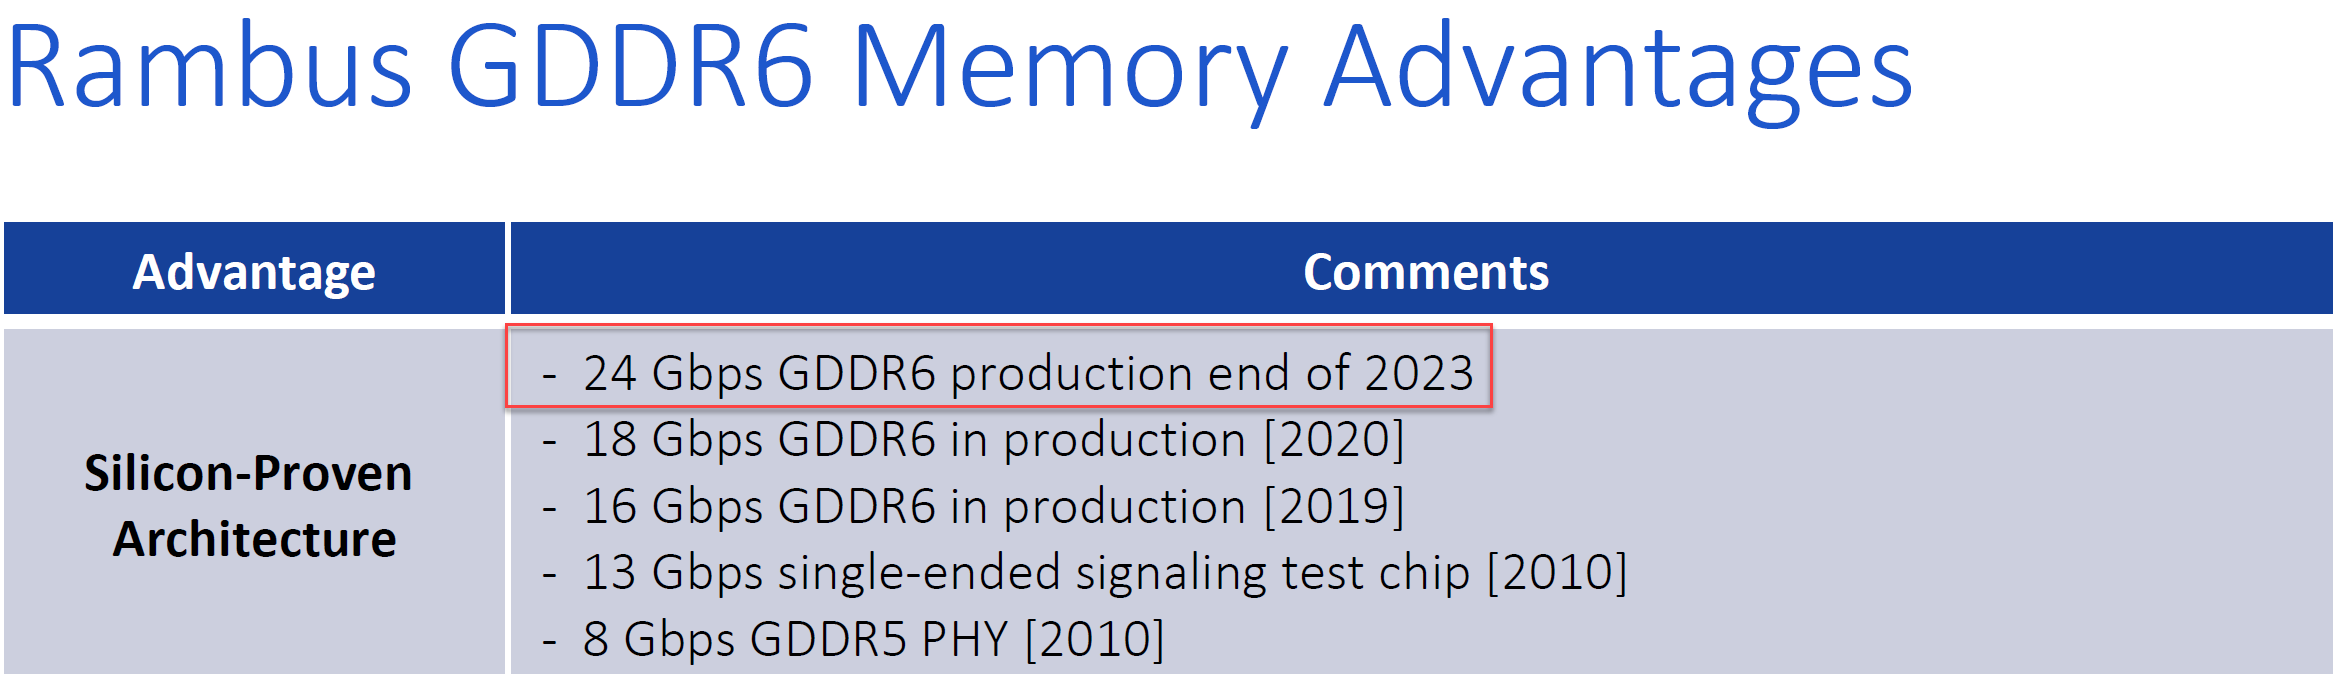 GDDR6 memory